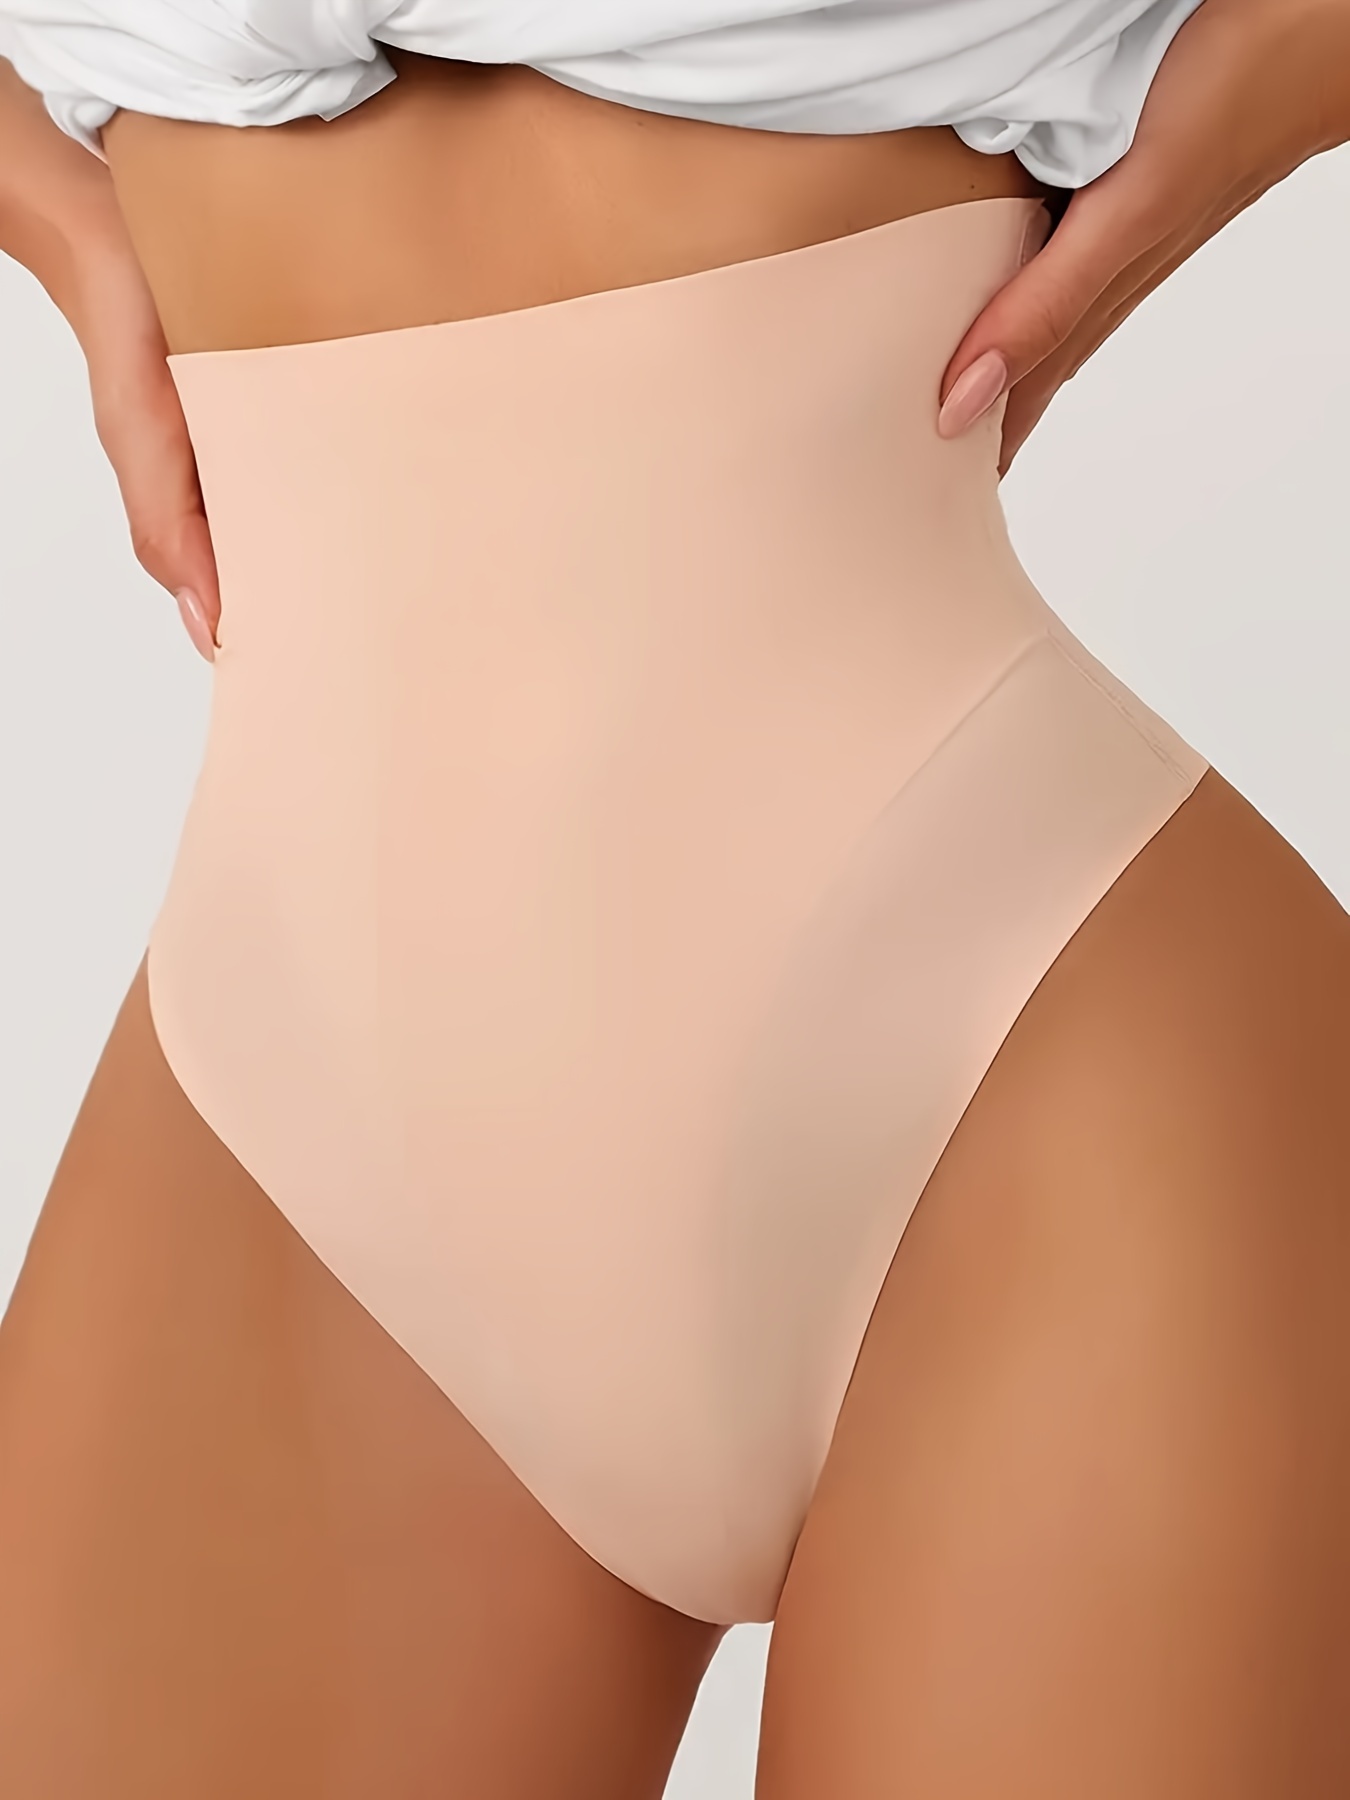 ESSSUT Underwear Womens Women's Abdomen Closing Open Shift Hip Lifting  Sling Underwear One-Piece Body Shaping Clothes Lingerie For Women S